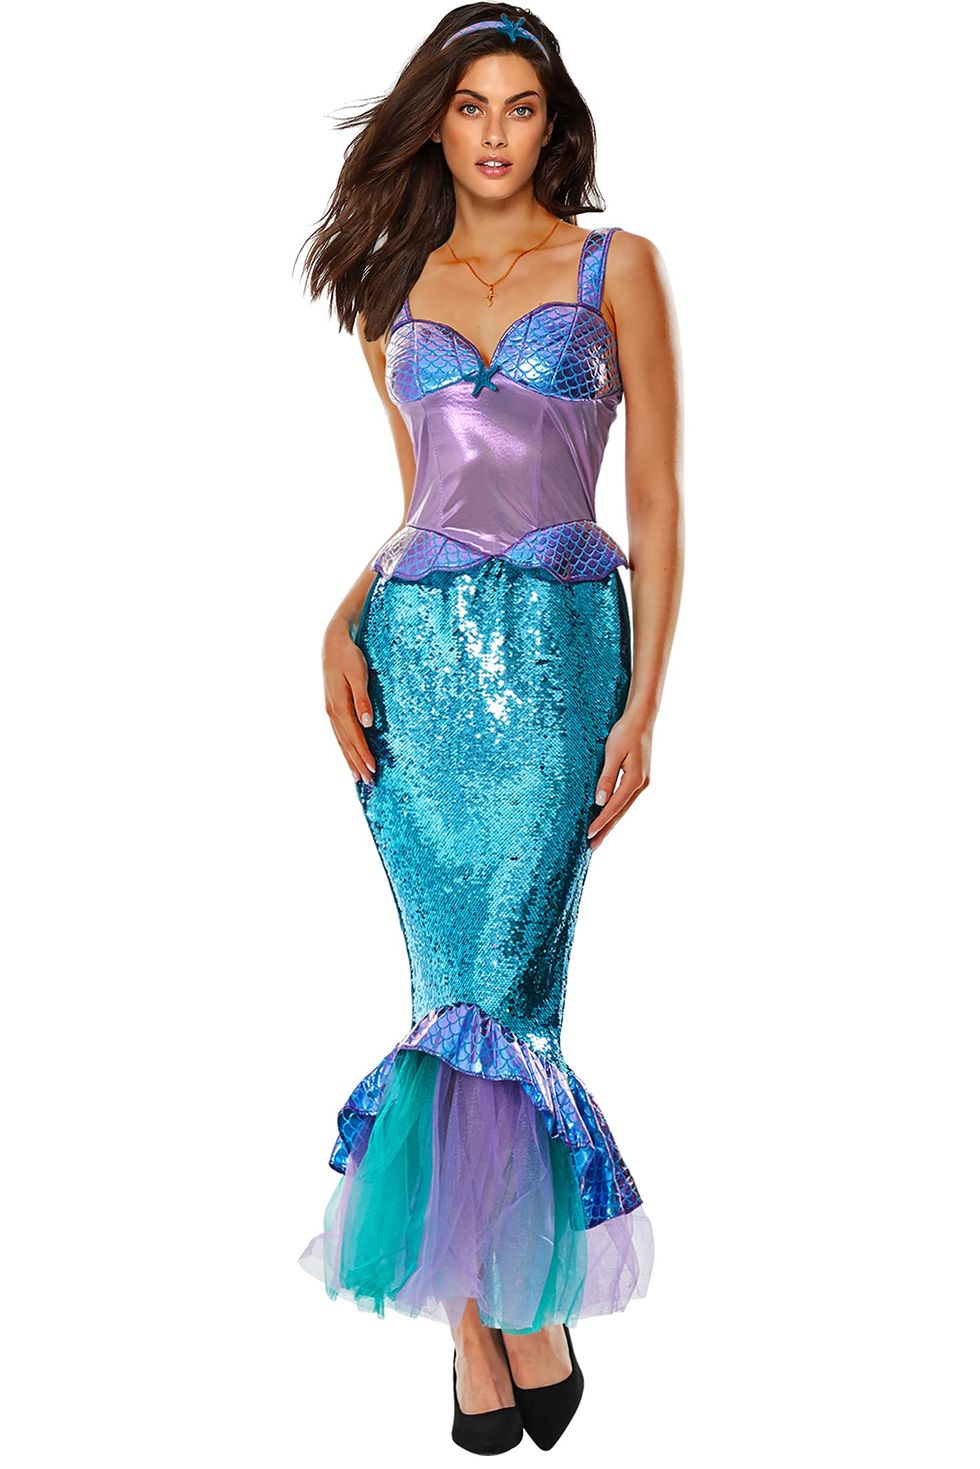 ReneeCho Womens Mermaid Dress